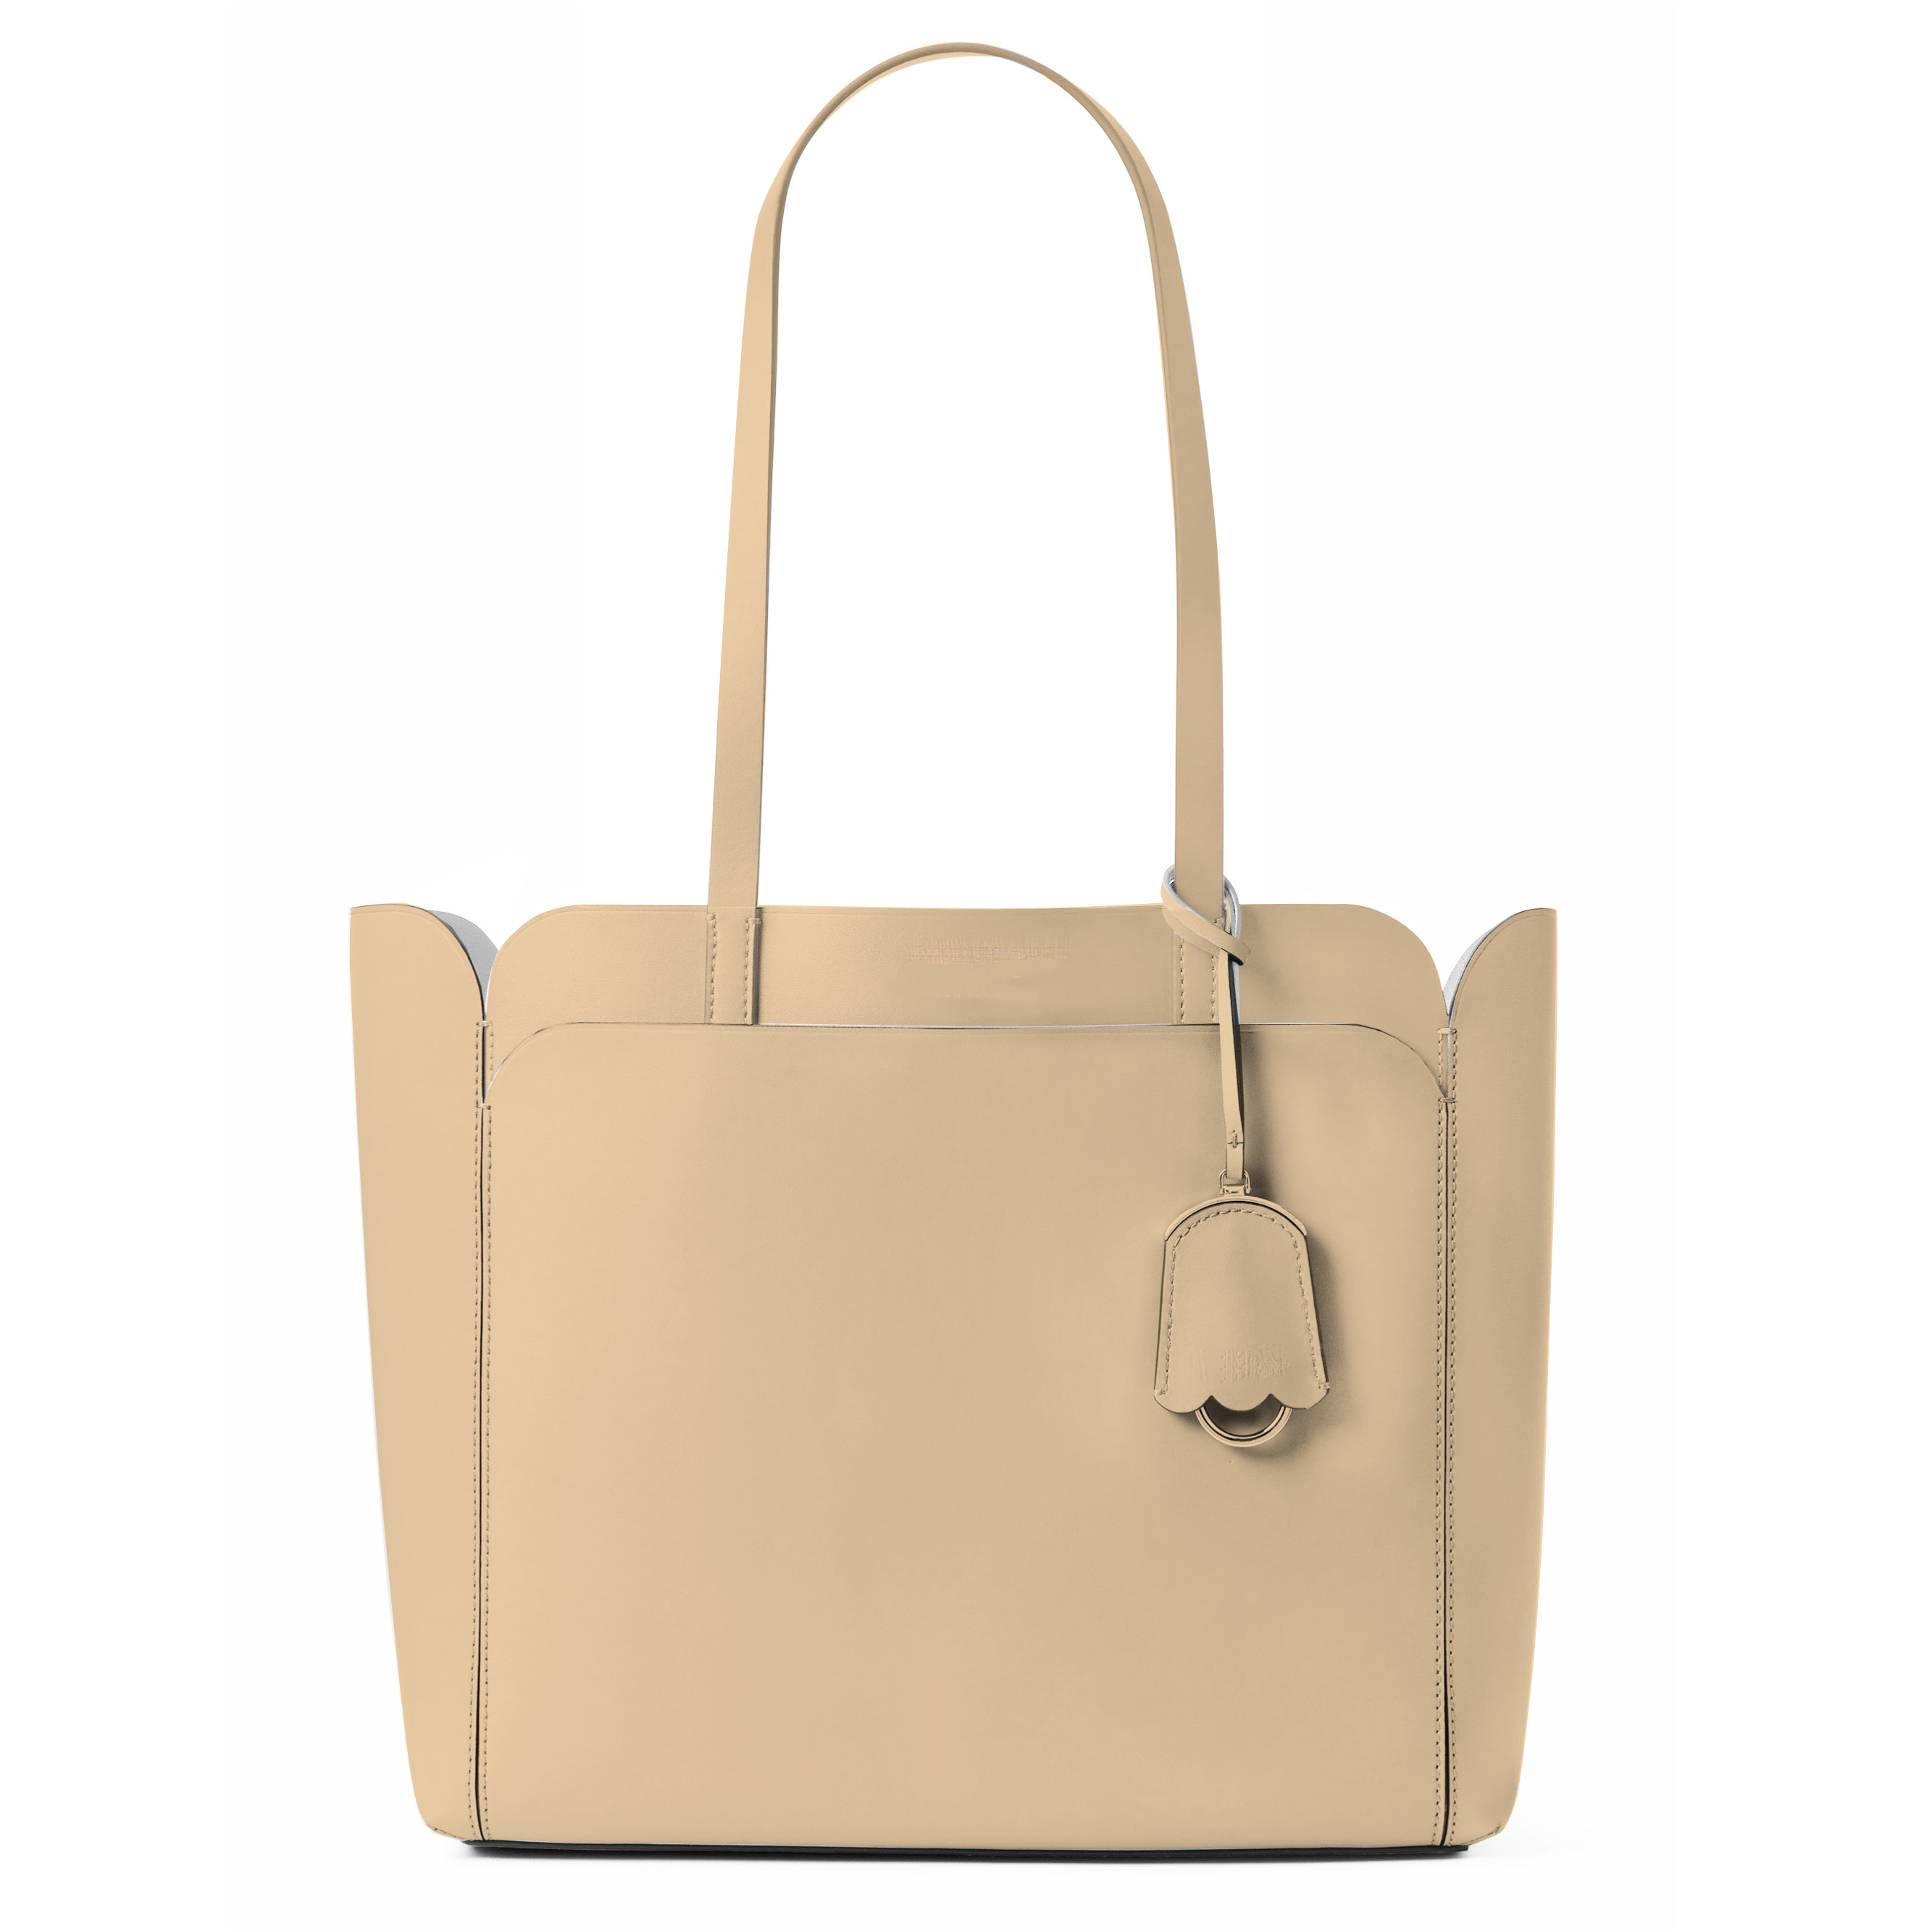 Custom famous brand high quality women leather tote handbags